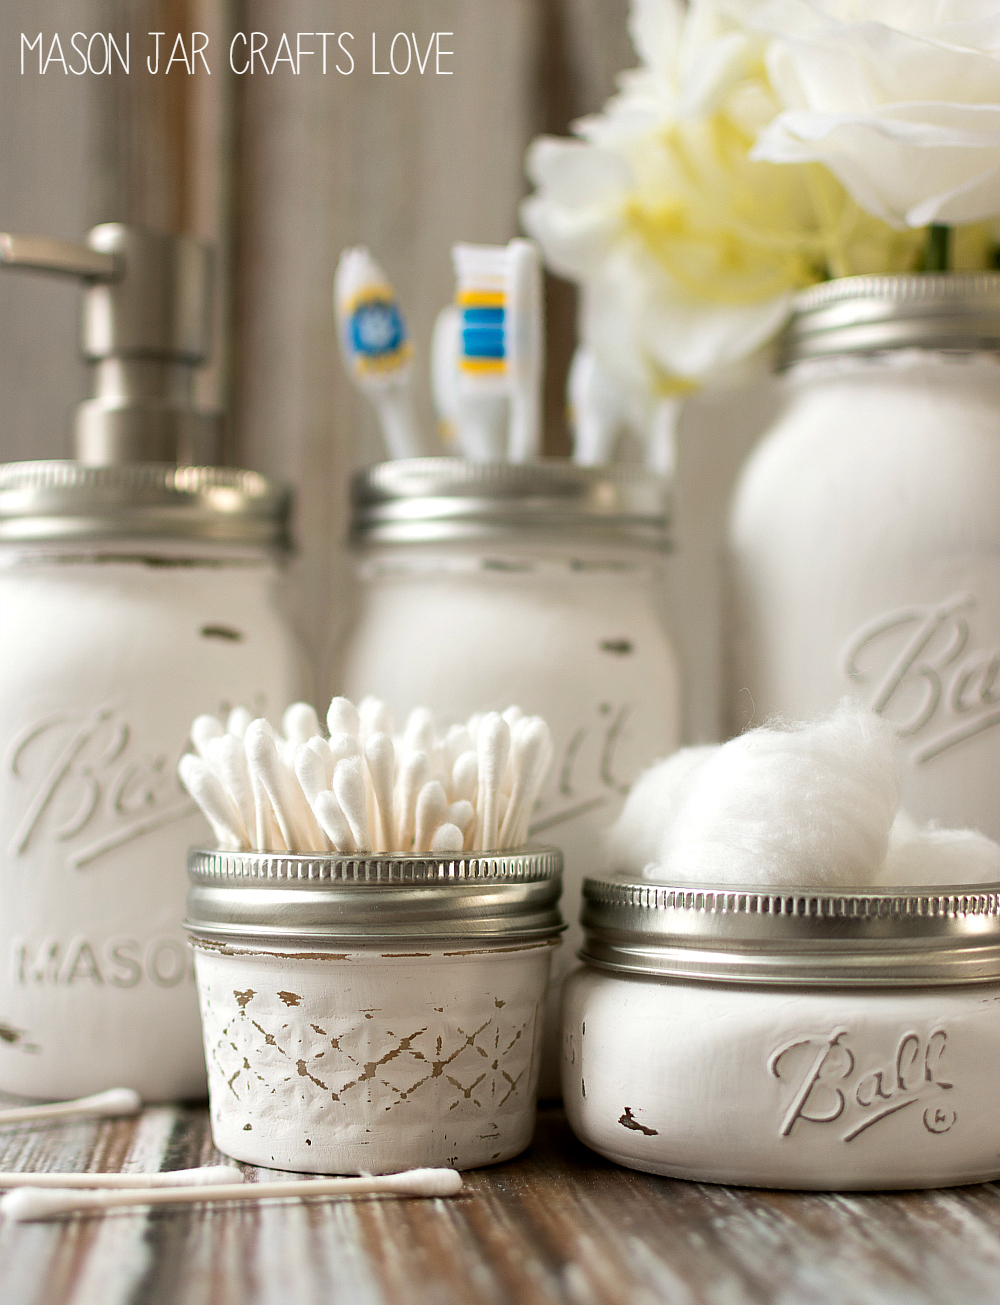 Mason Jar Bathroom Storage & Accessories - Mason Jar Crafts Love